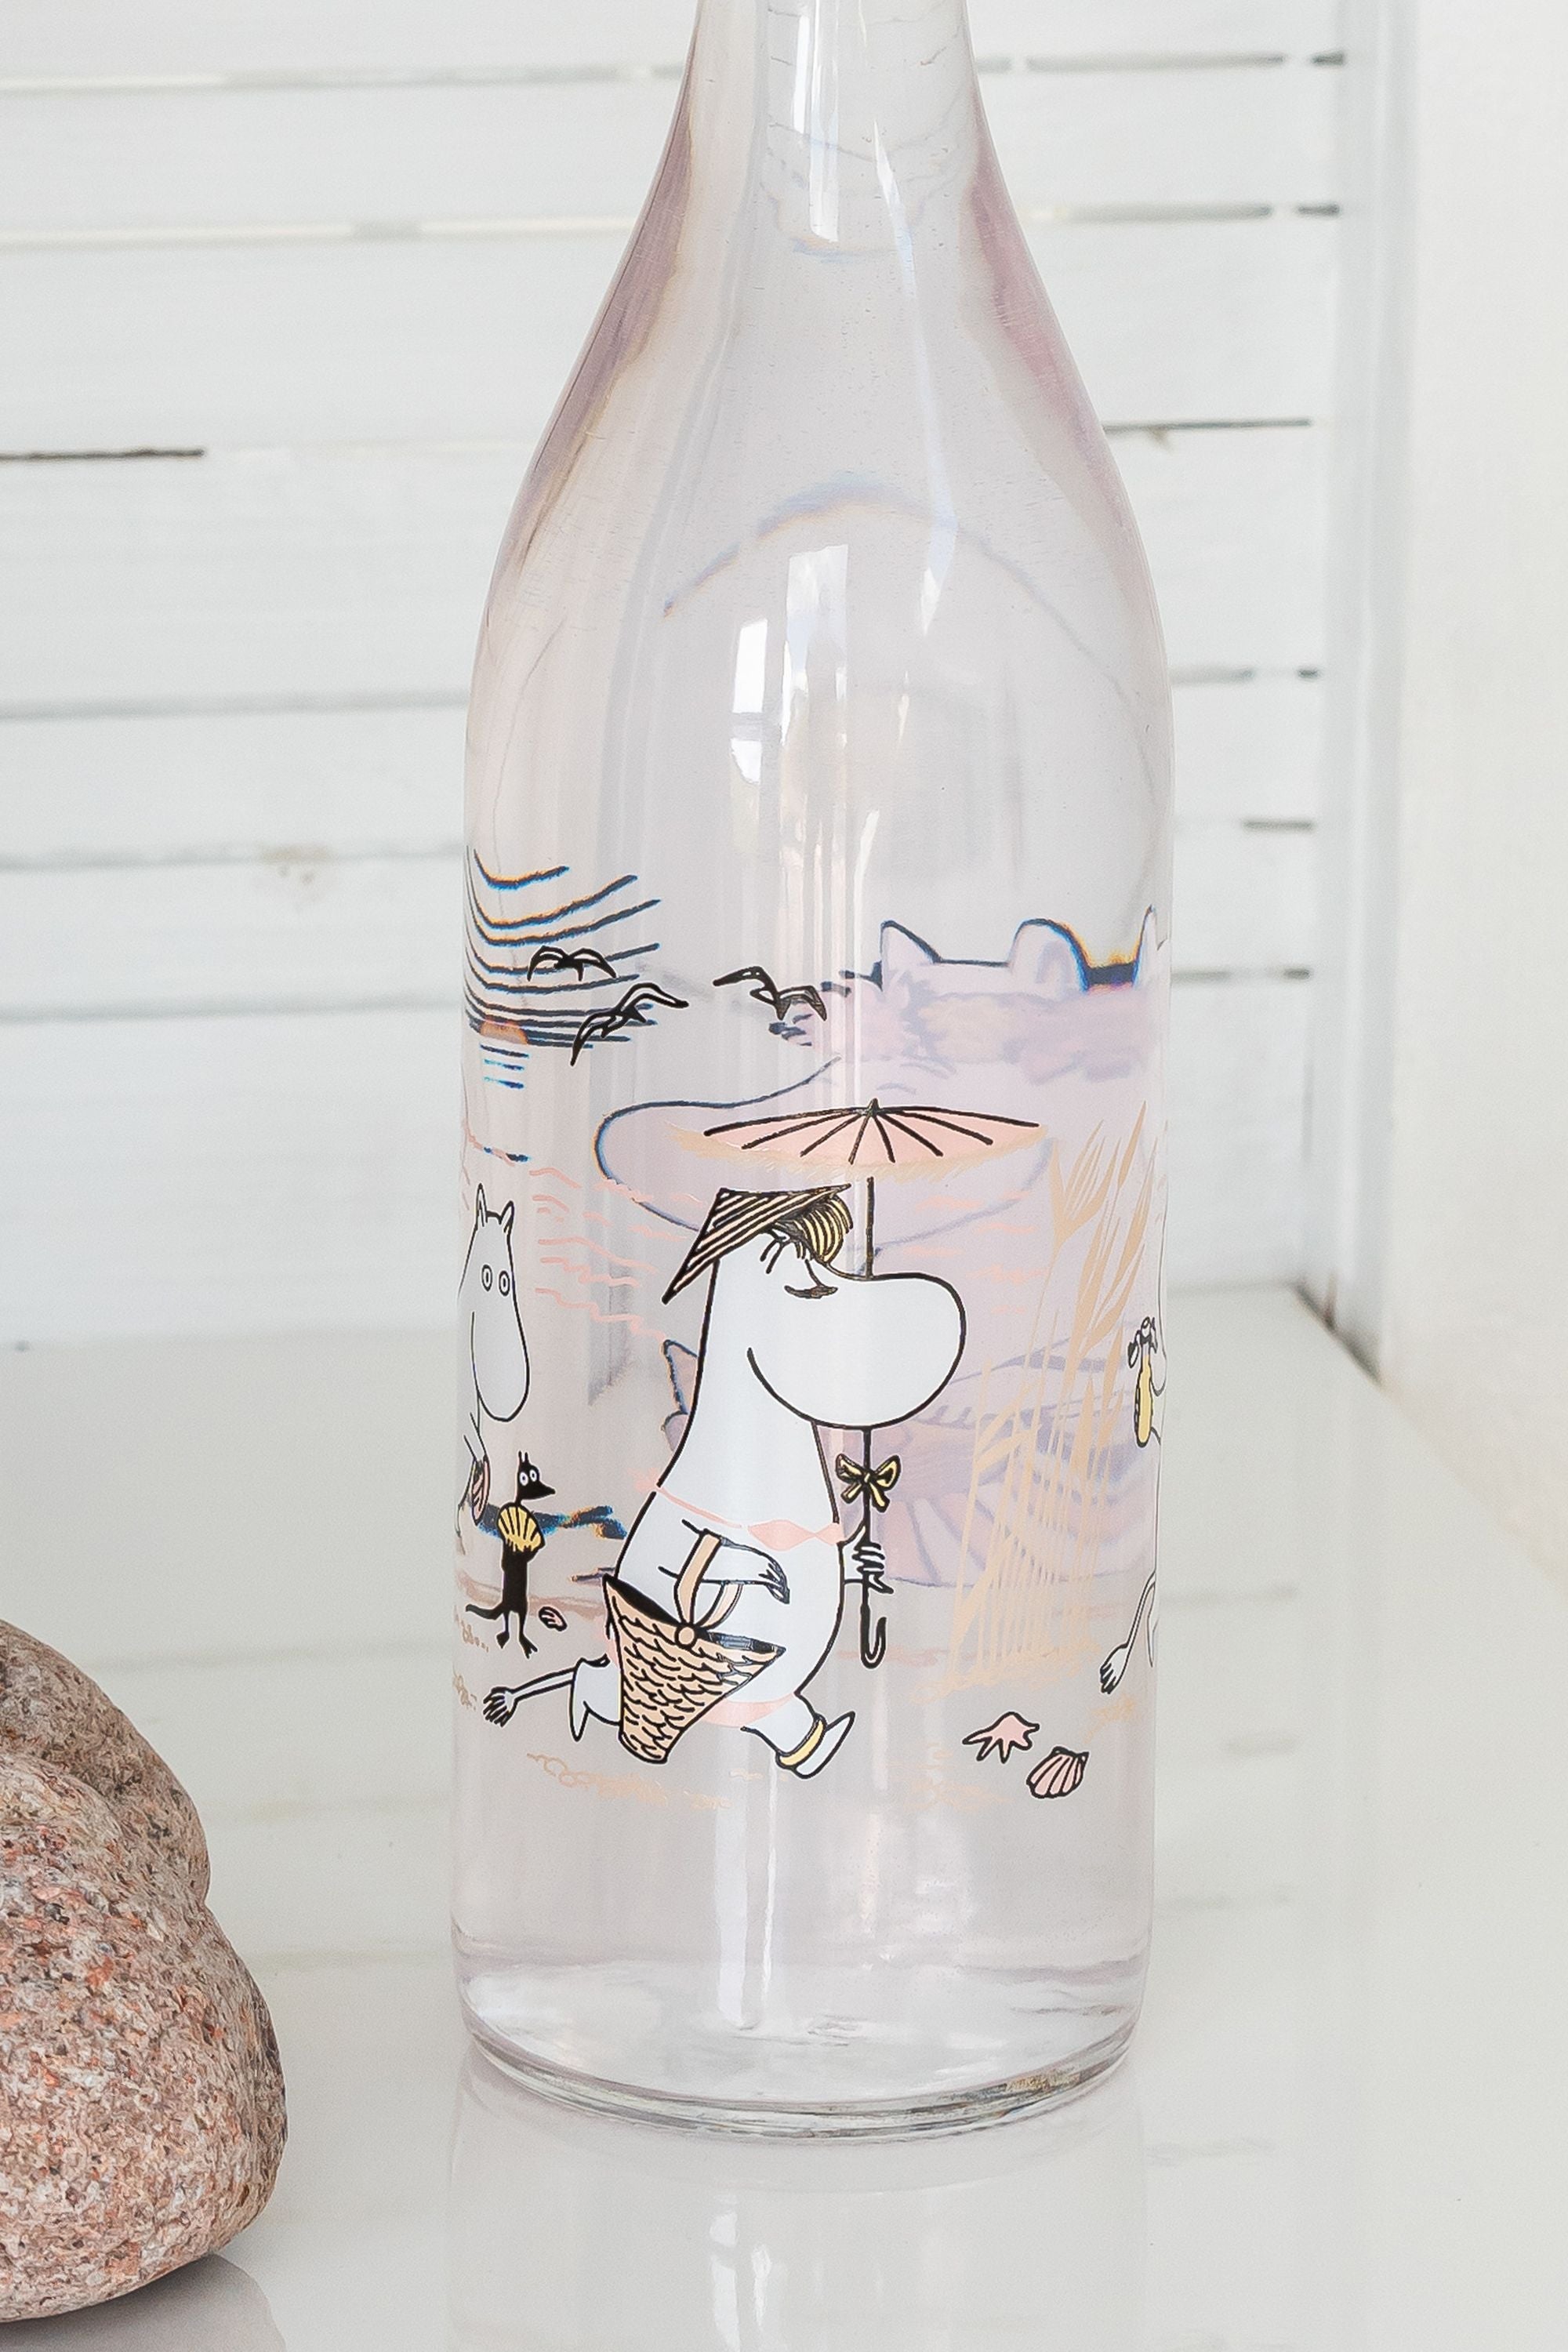 Muurla Moomin glasflaske, stranden